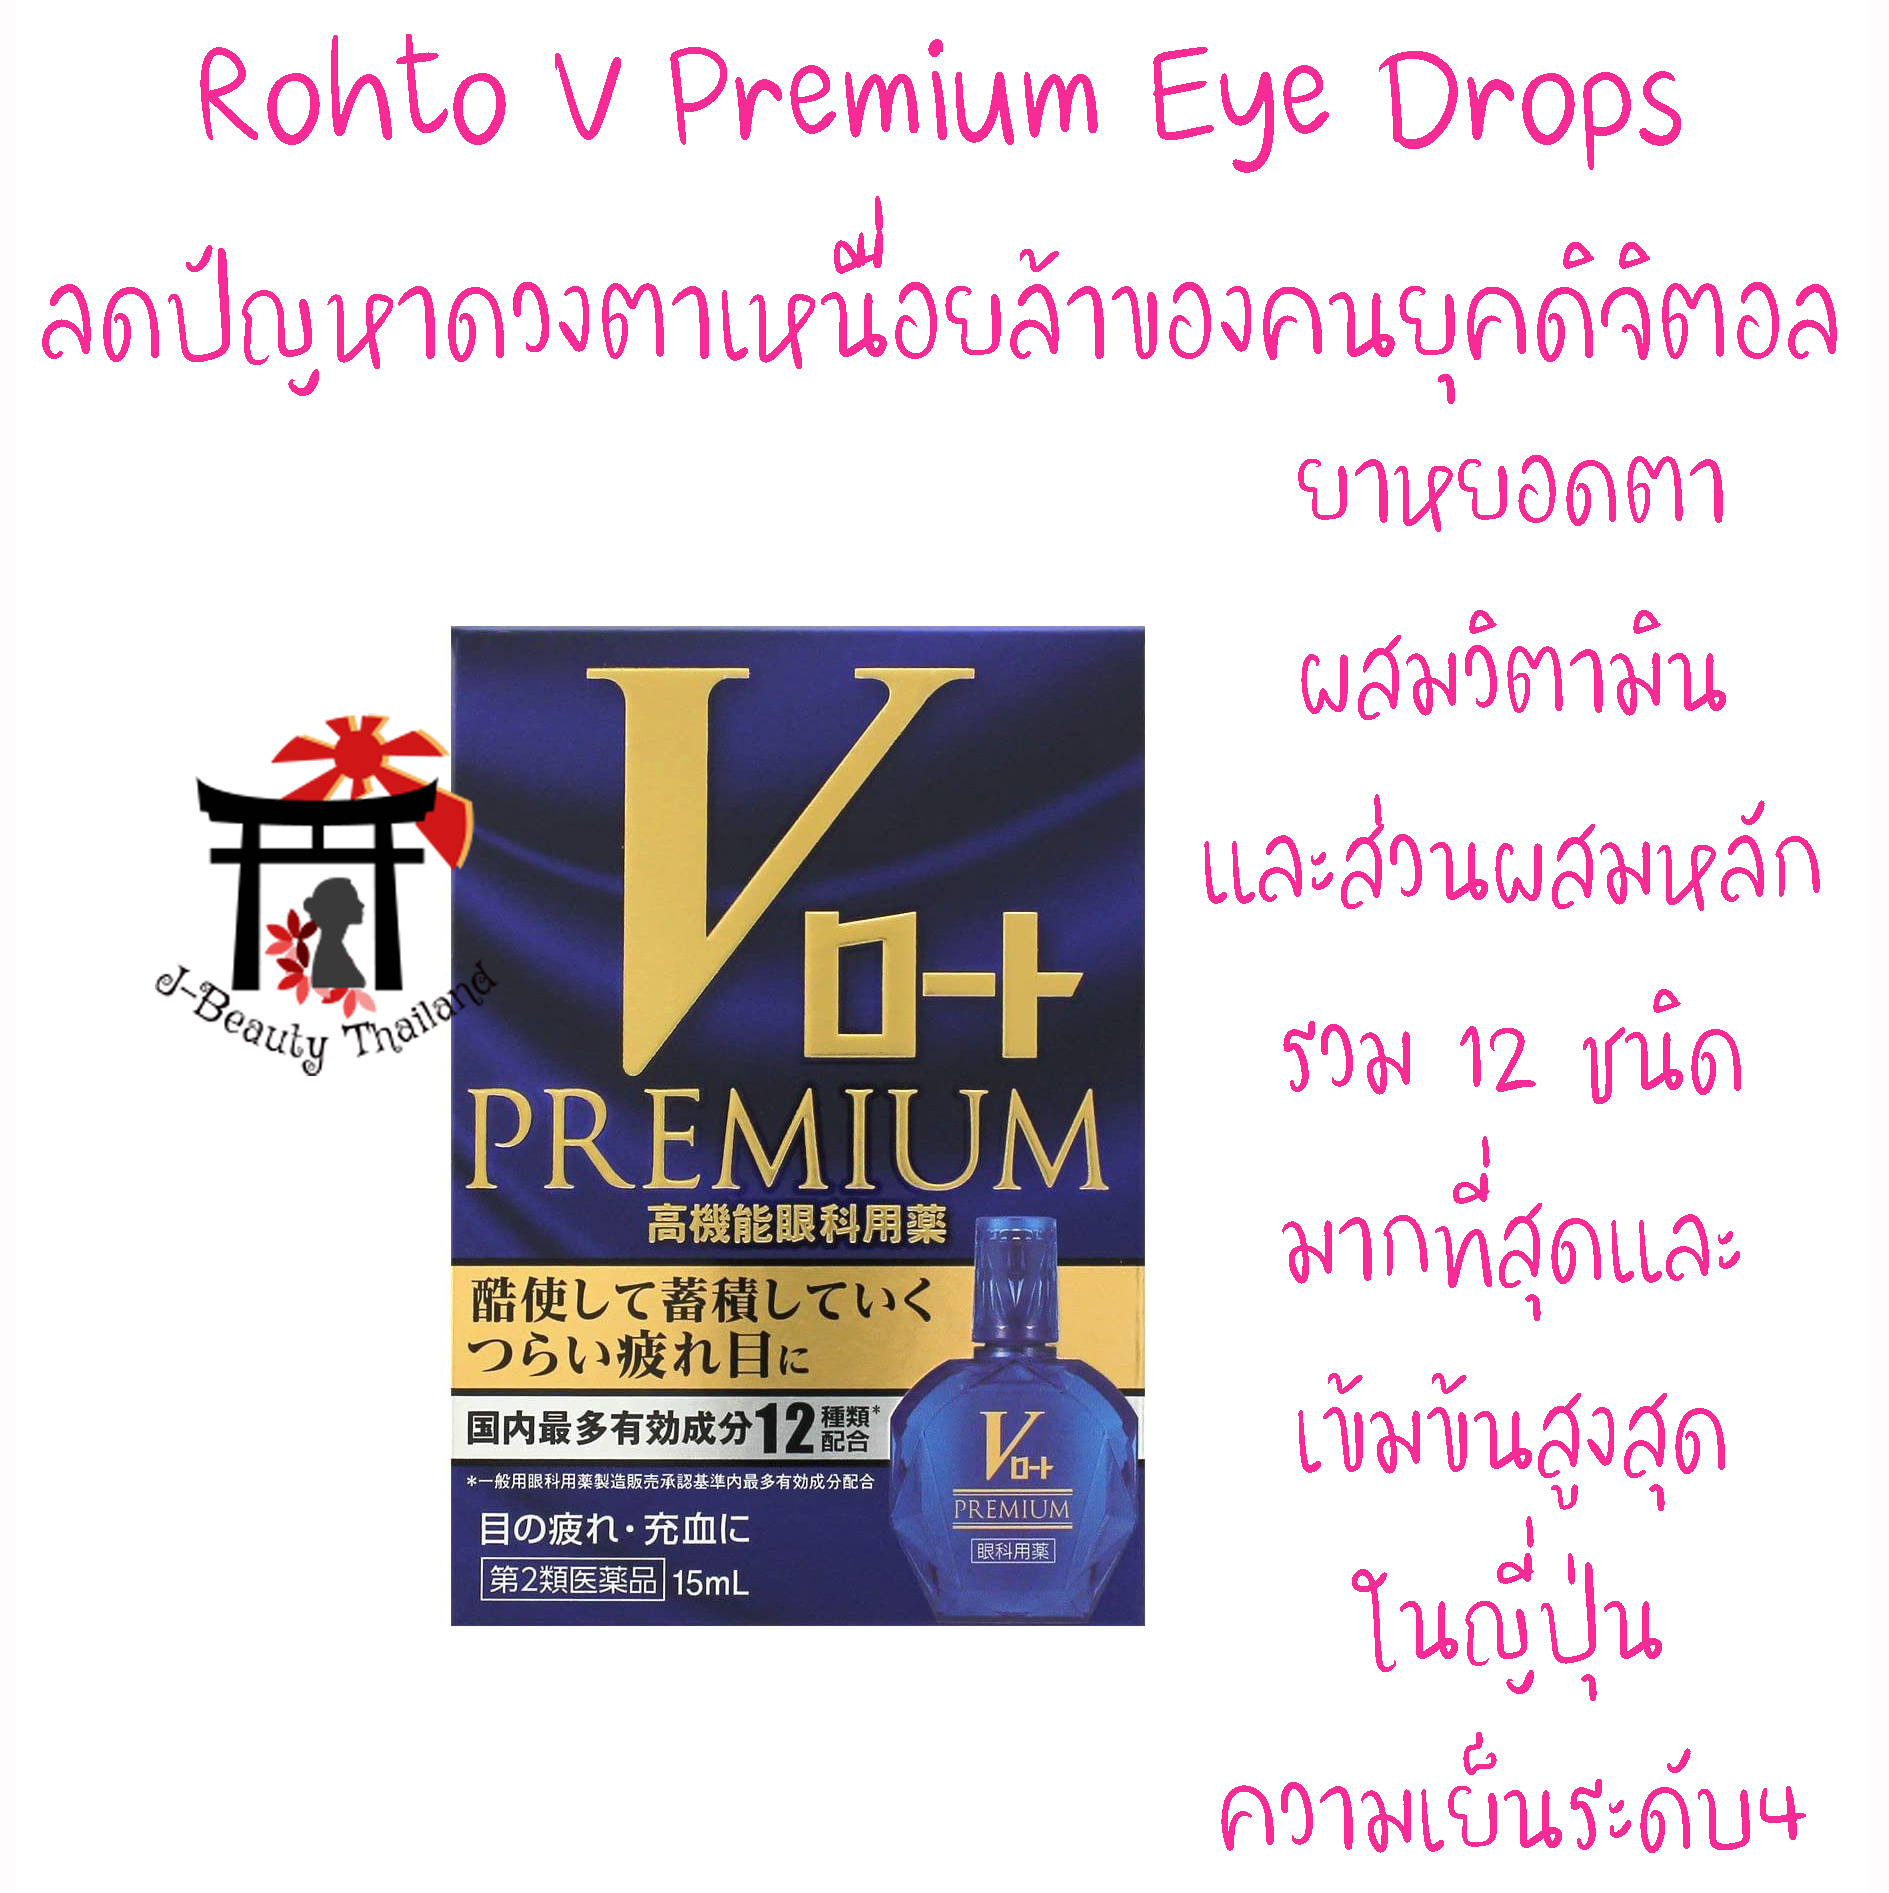 Rohto V Premium Eye Drops โรโตะ วี พรีเมี่ยม ผสมวิตามินและส่วนผสมหลักรวม 12 ชนิด มากที่สุดและเข้มข้นสูงสุดในญี่ปุ่น ความเย็นระดับ4 ขนาด 15 มล.